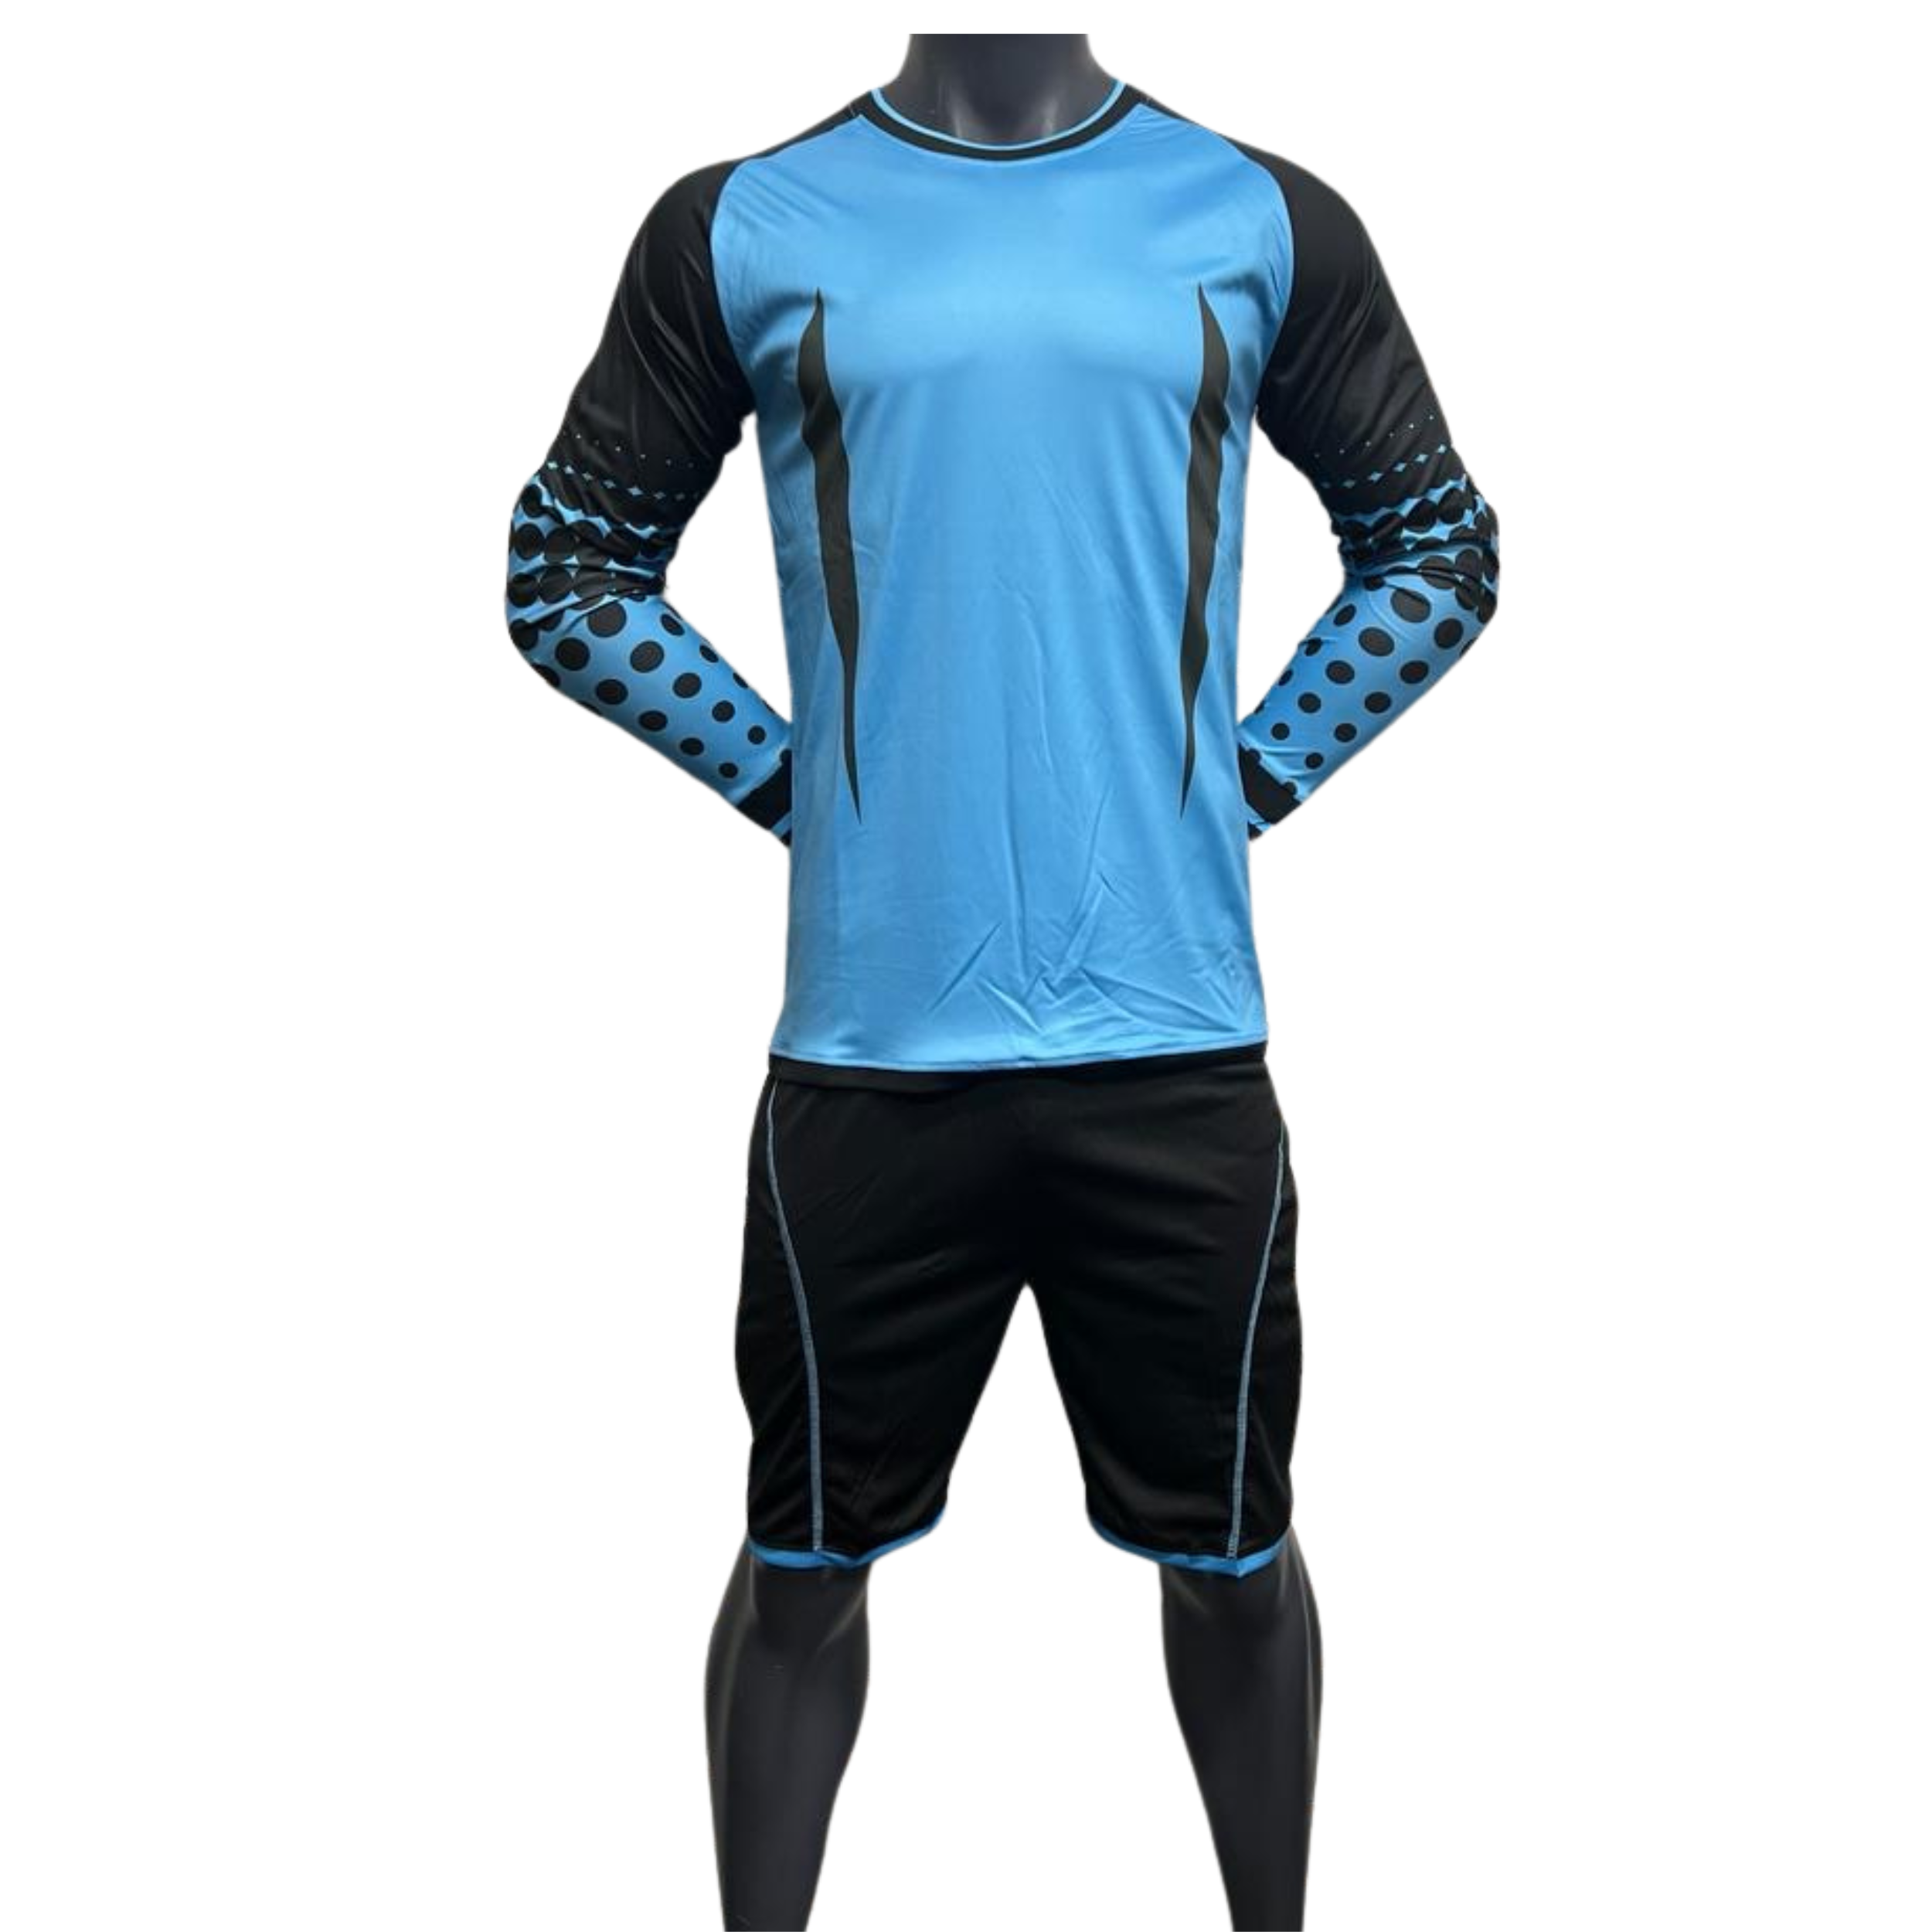 Sky Blue Goalkeeper Uniform